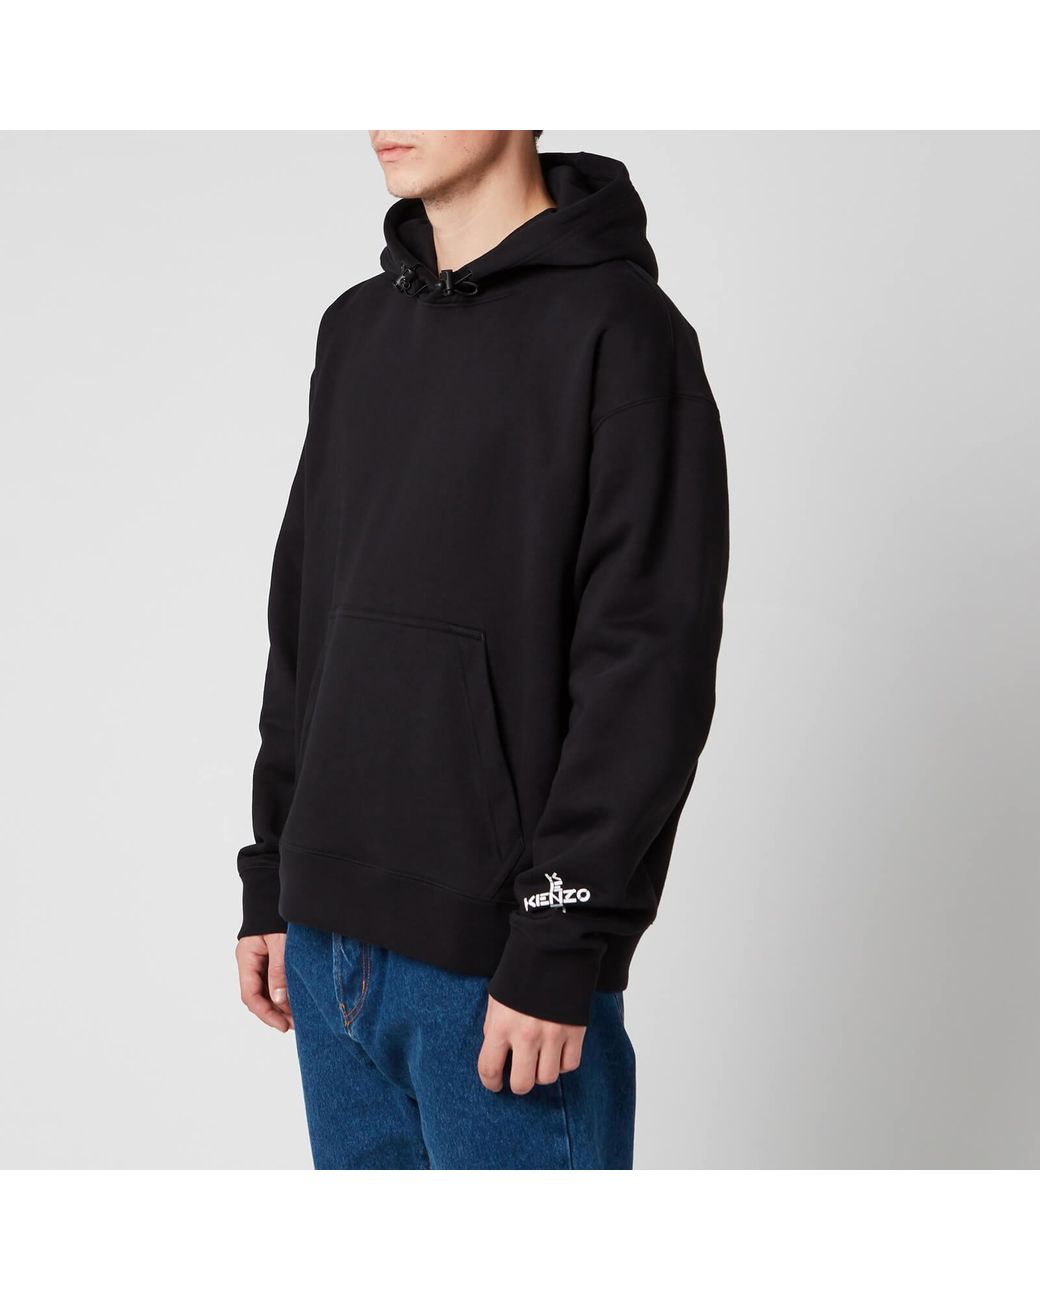 KENZO Cotton Sport Oversized Hooded Sweatshirt in Black for Men 